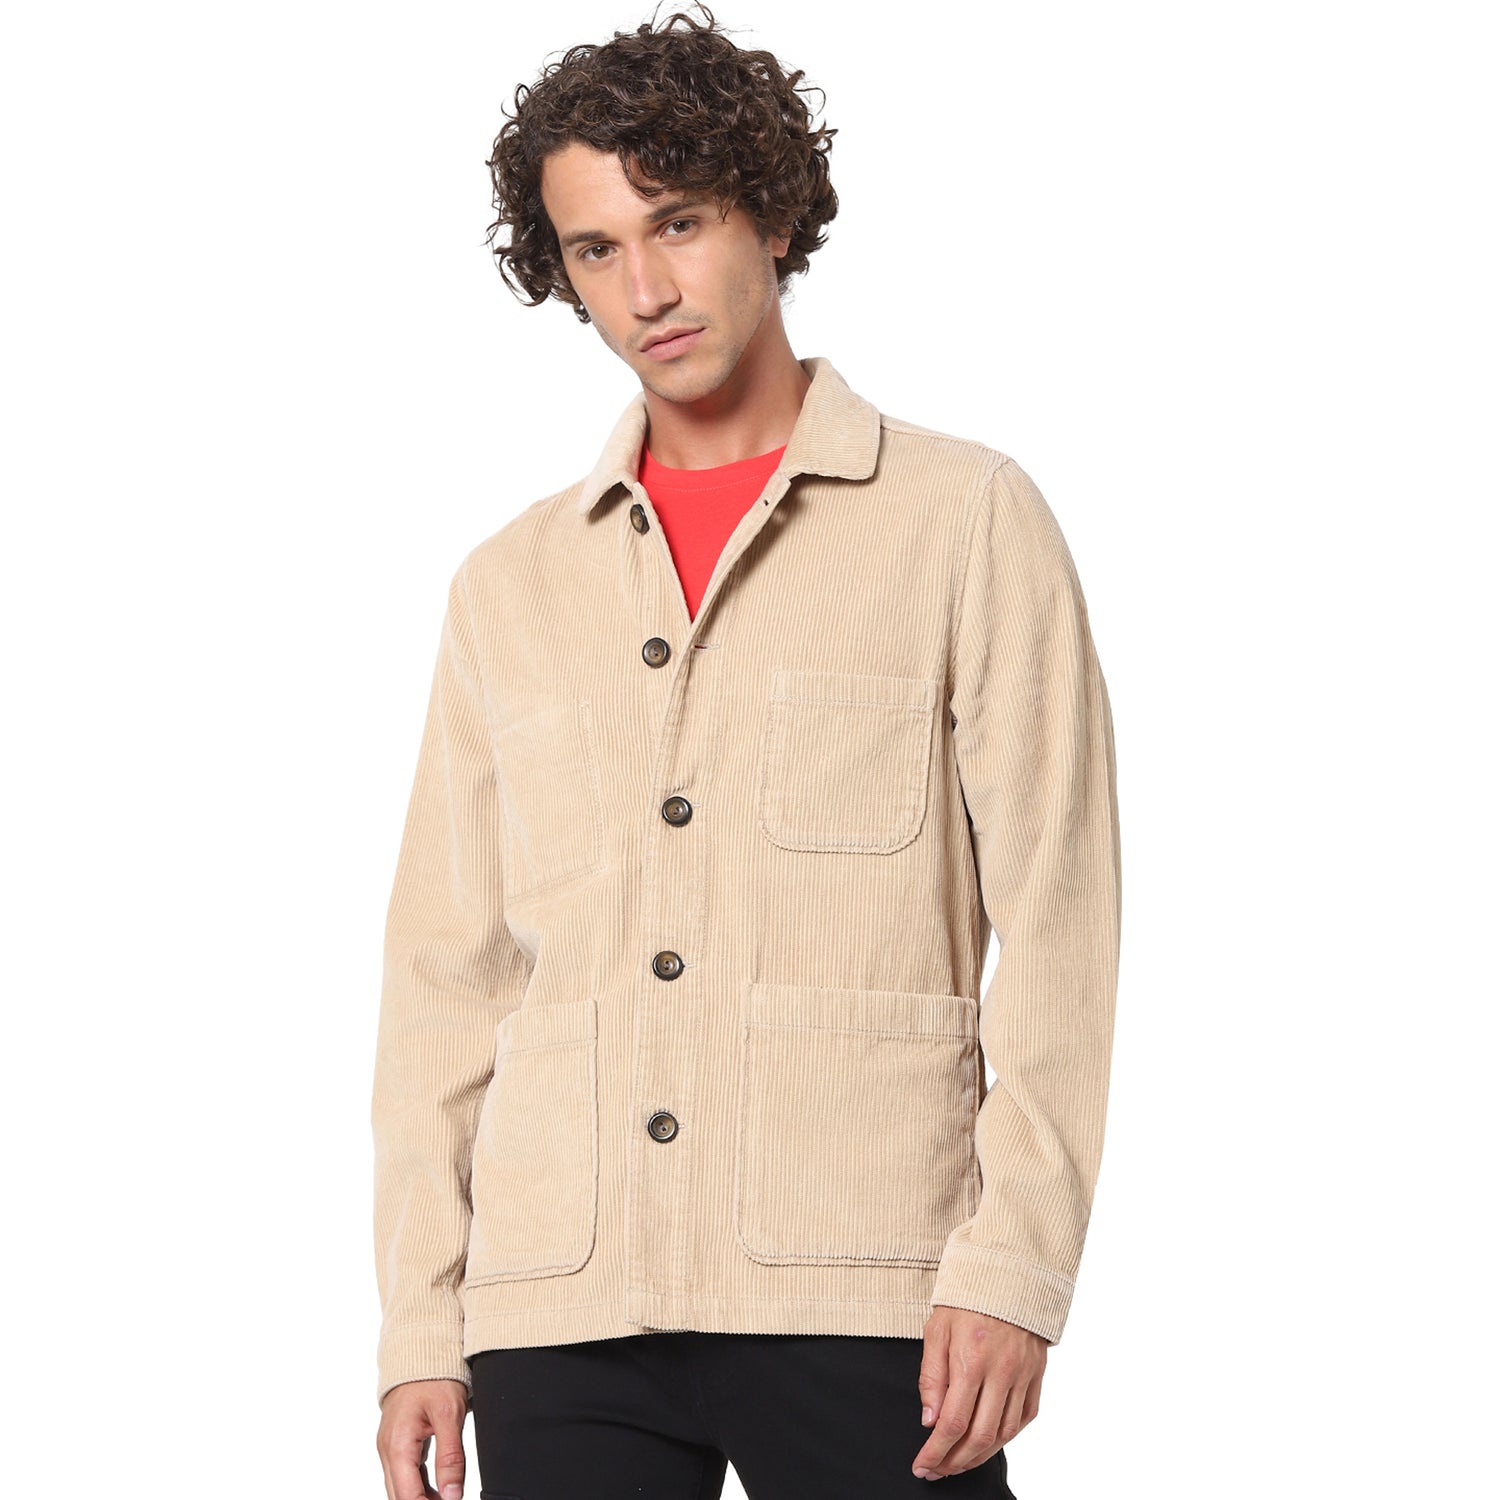 Beige Solid Cotton Long Sleeves Tailored Jacket (VUMUSEVELI)